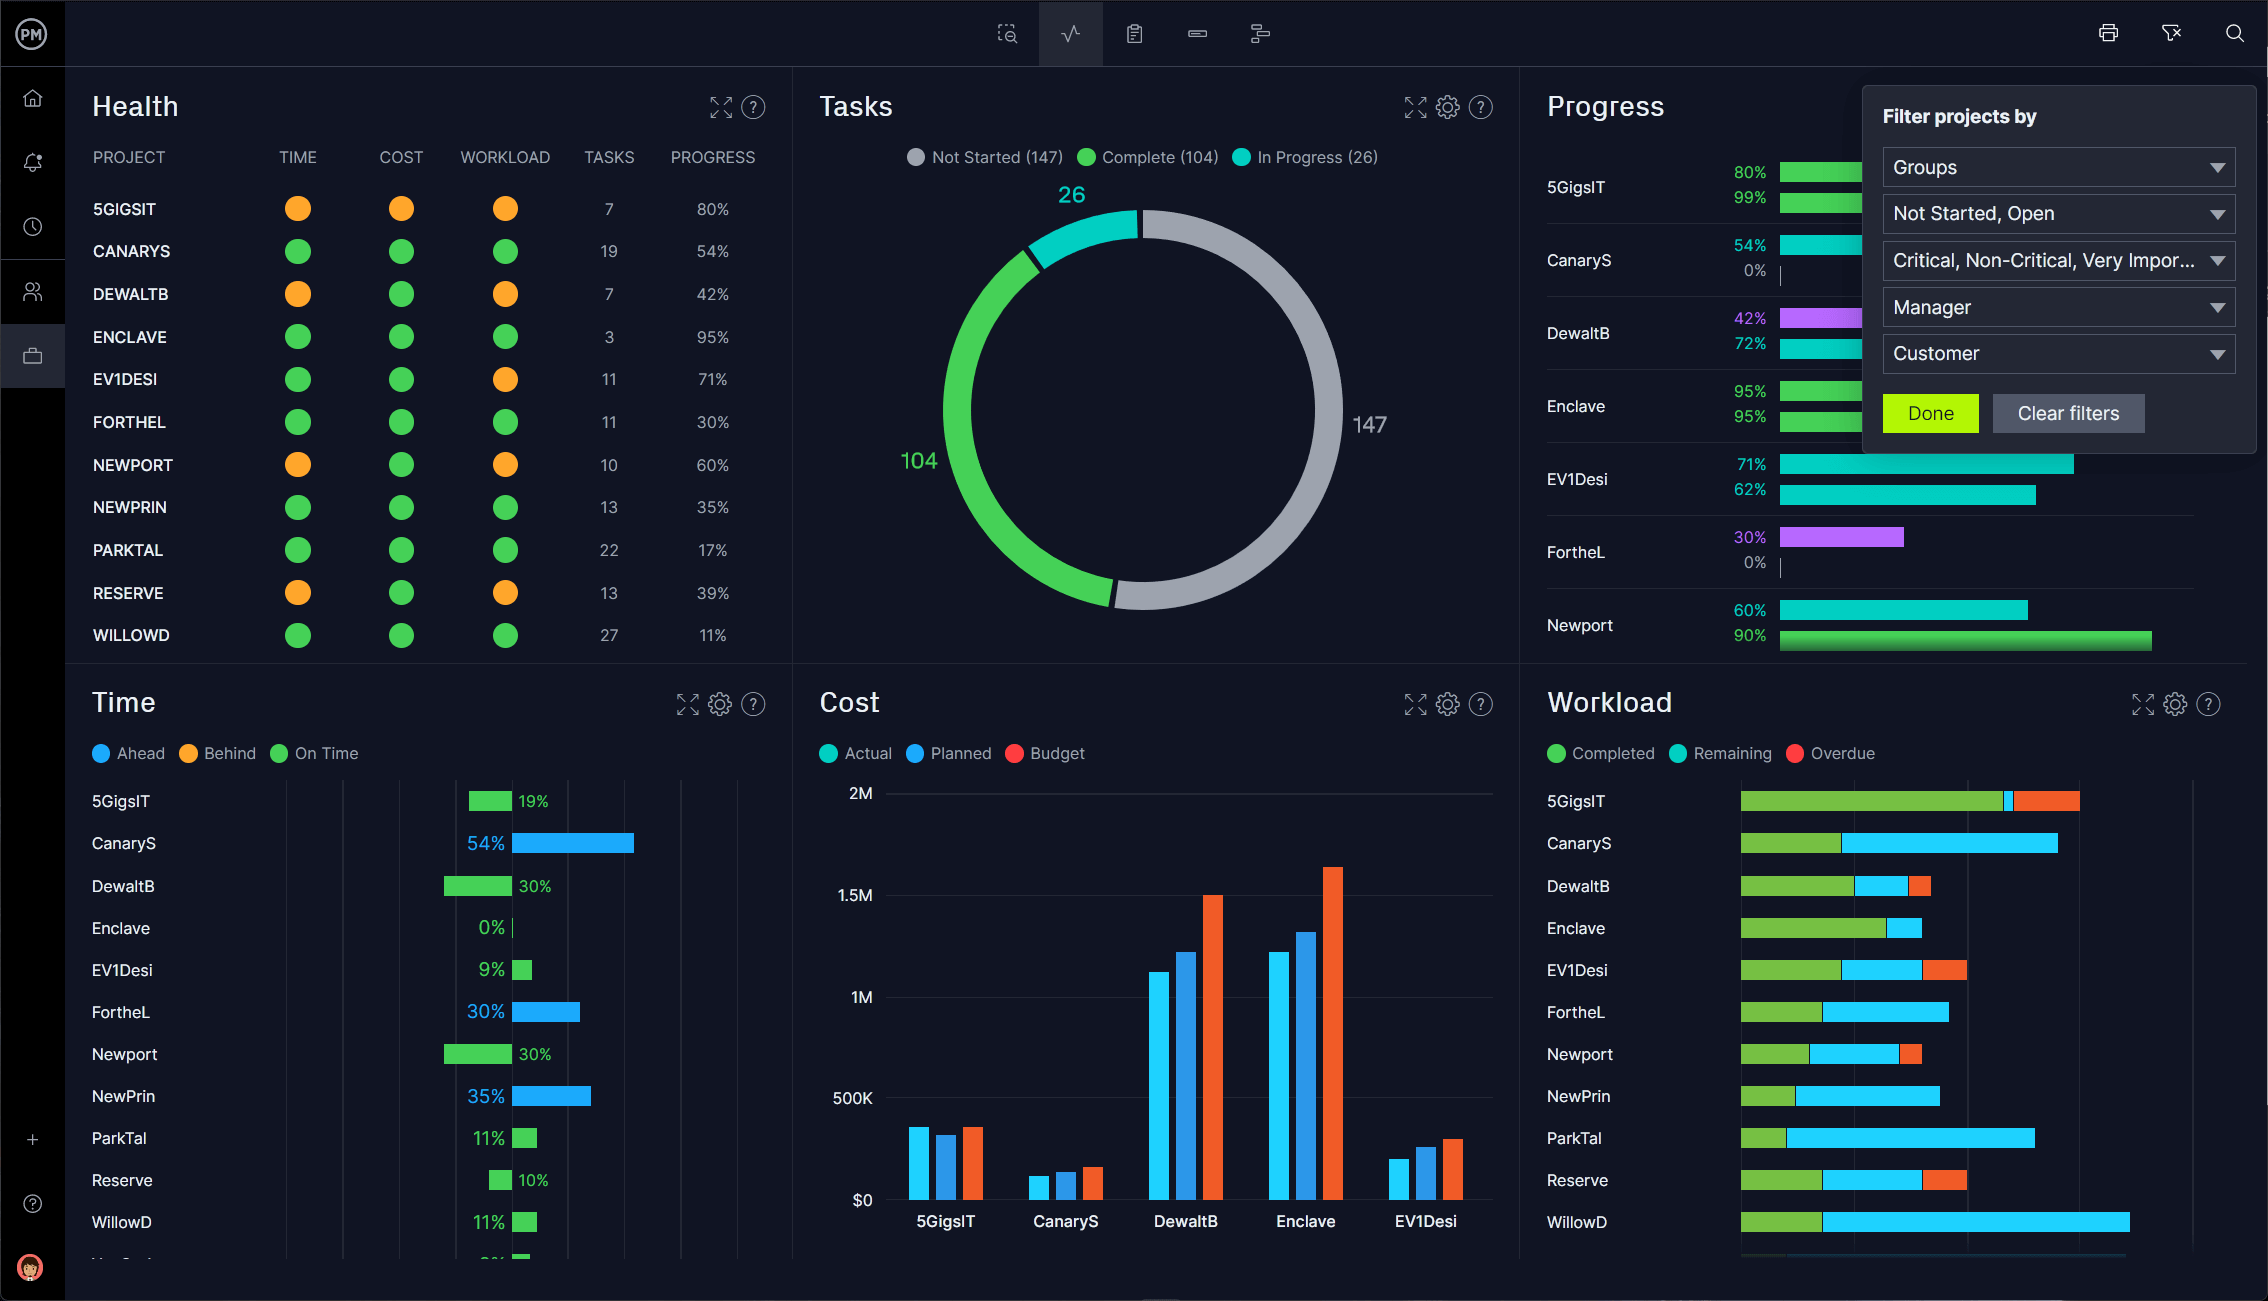 ProjectManager's portfolio dashboard